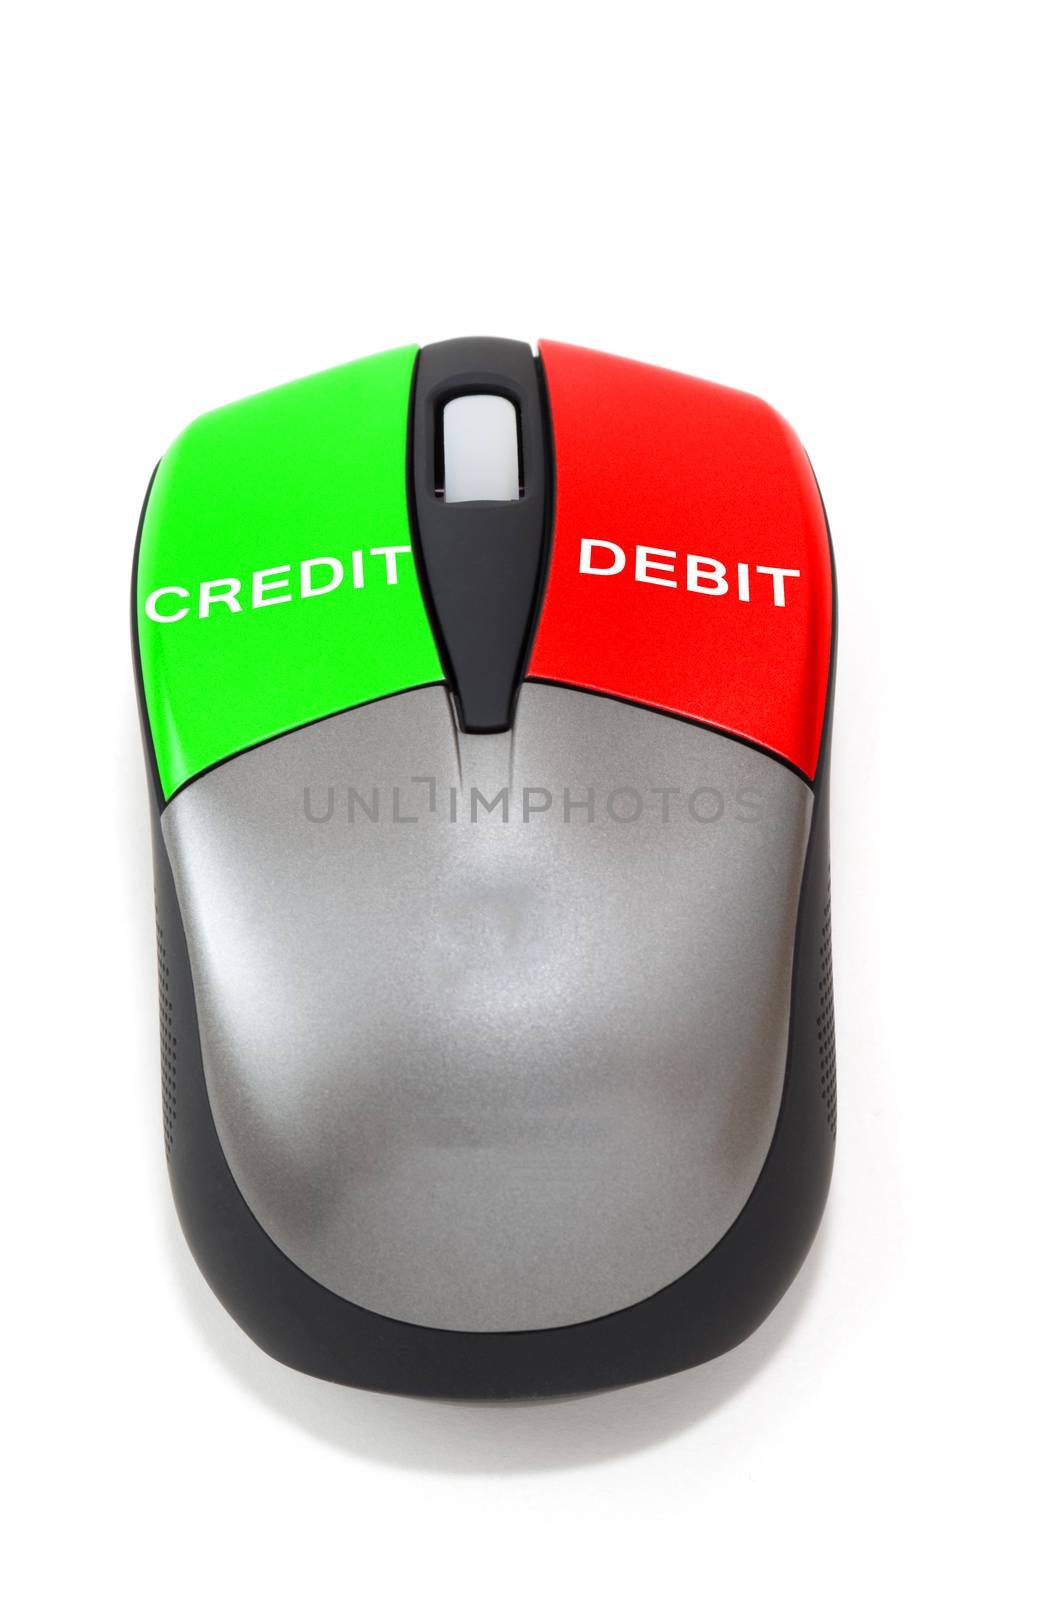 Credit and debit concept